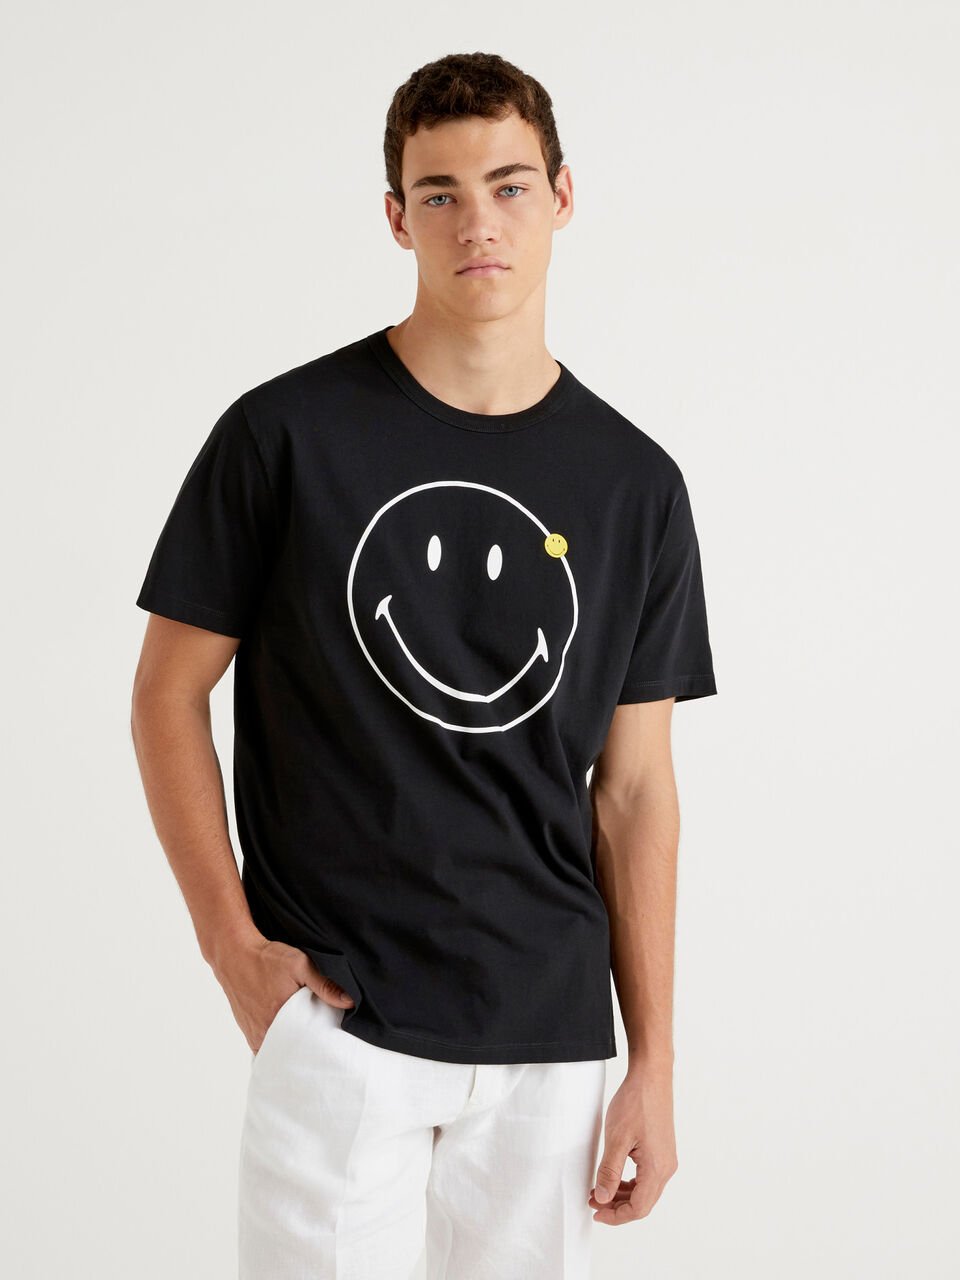 T-shirt manches courtes homme - SmileyWorld Believe – OTSO